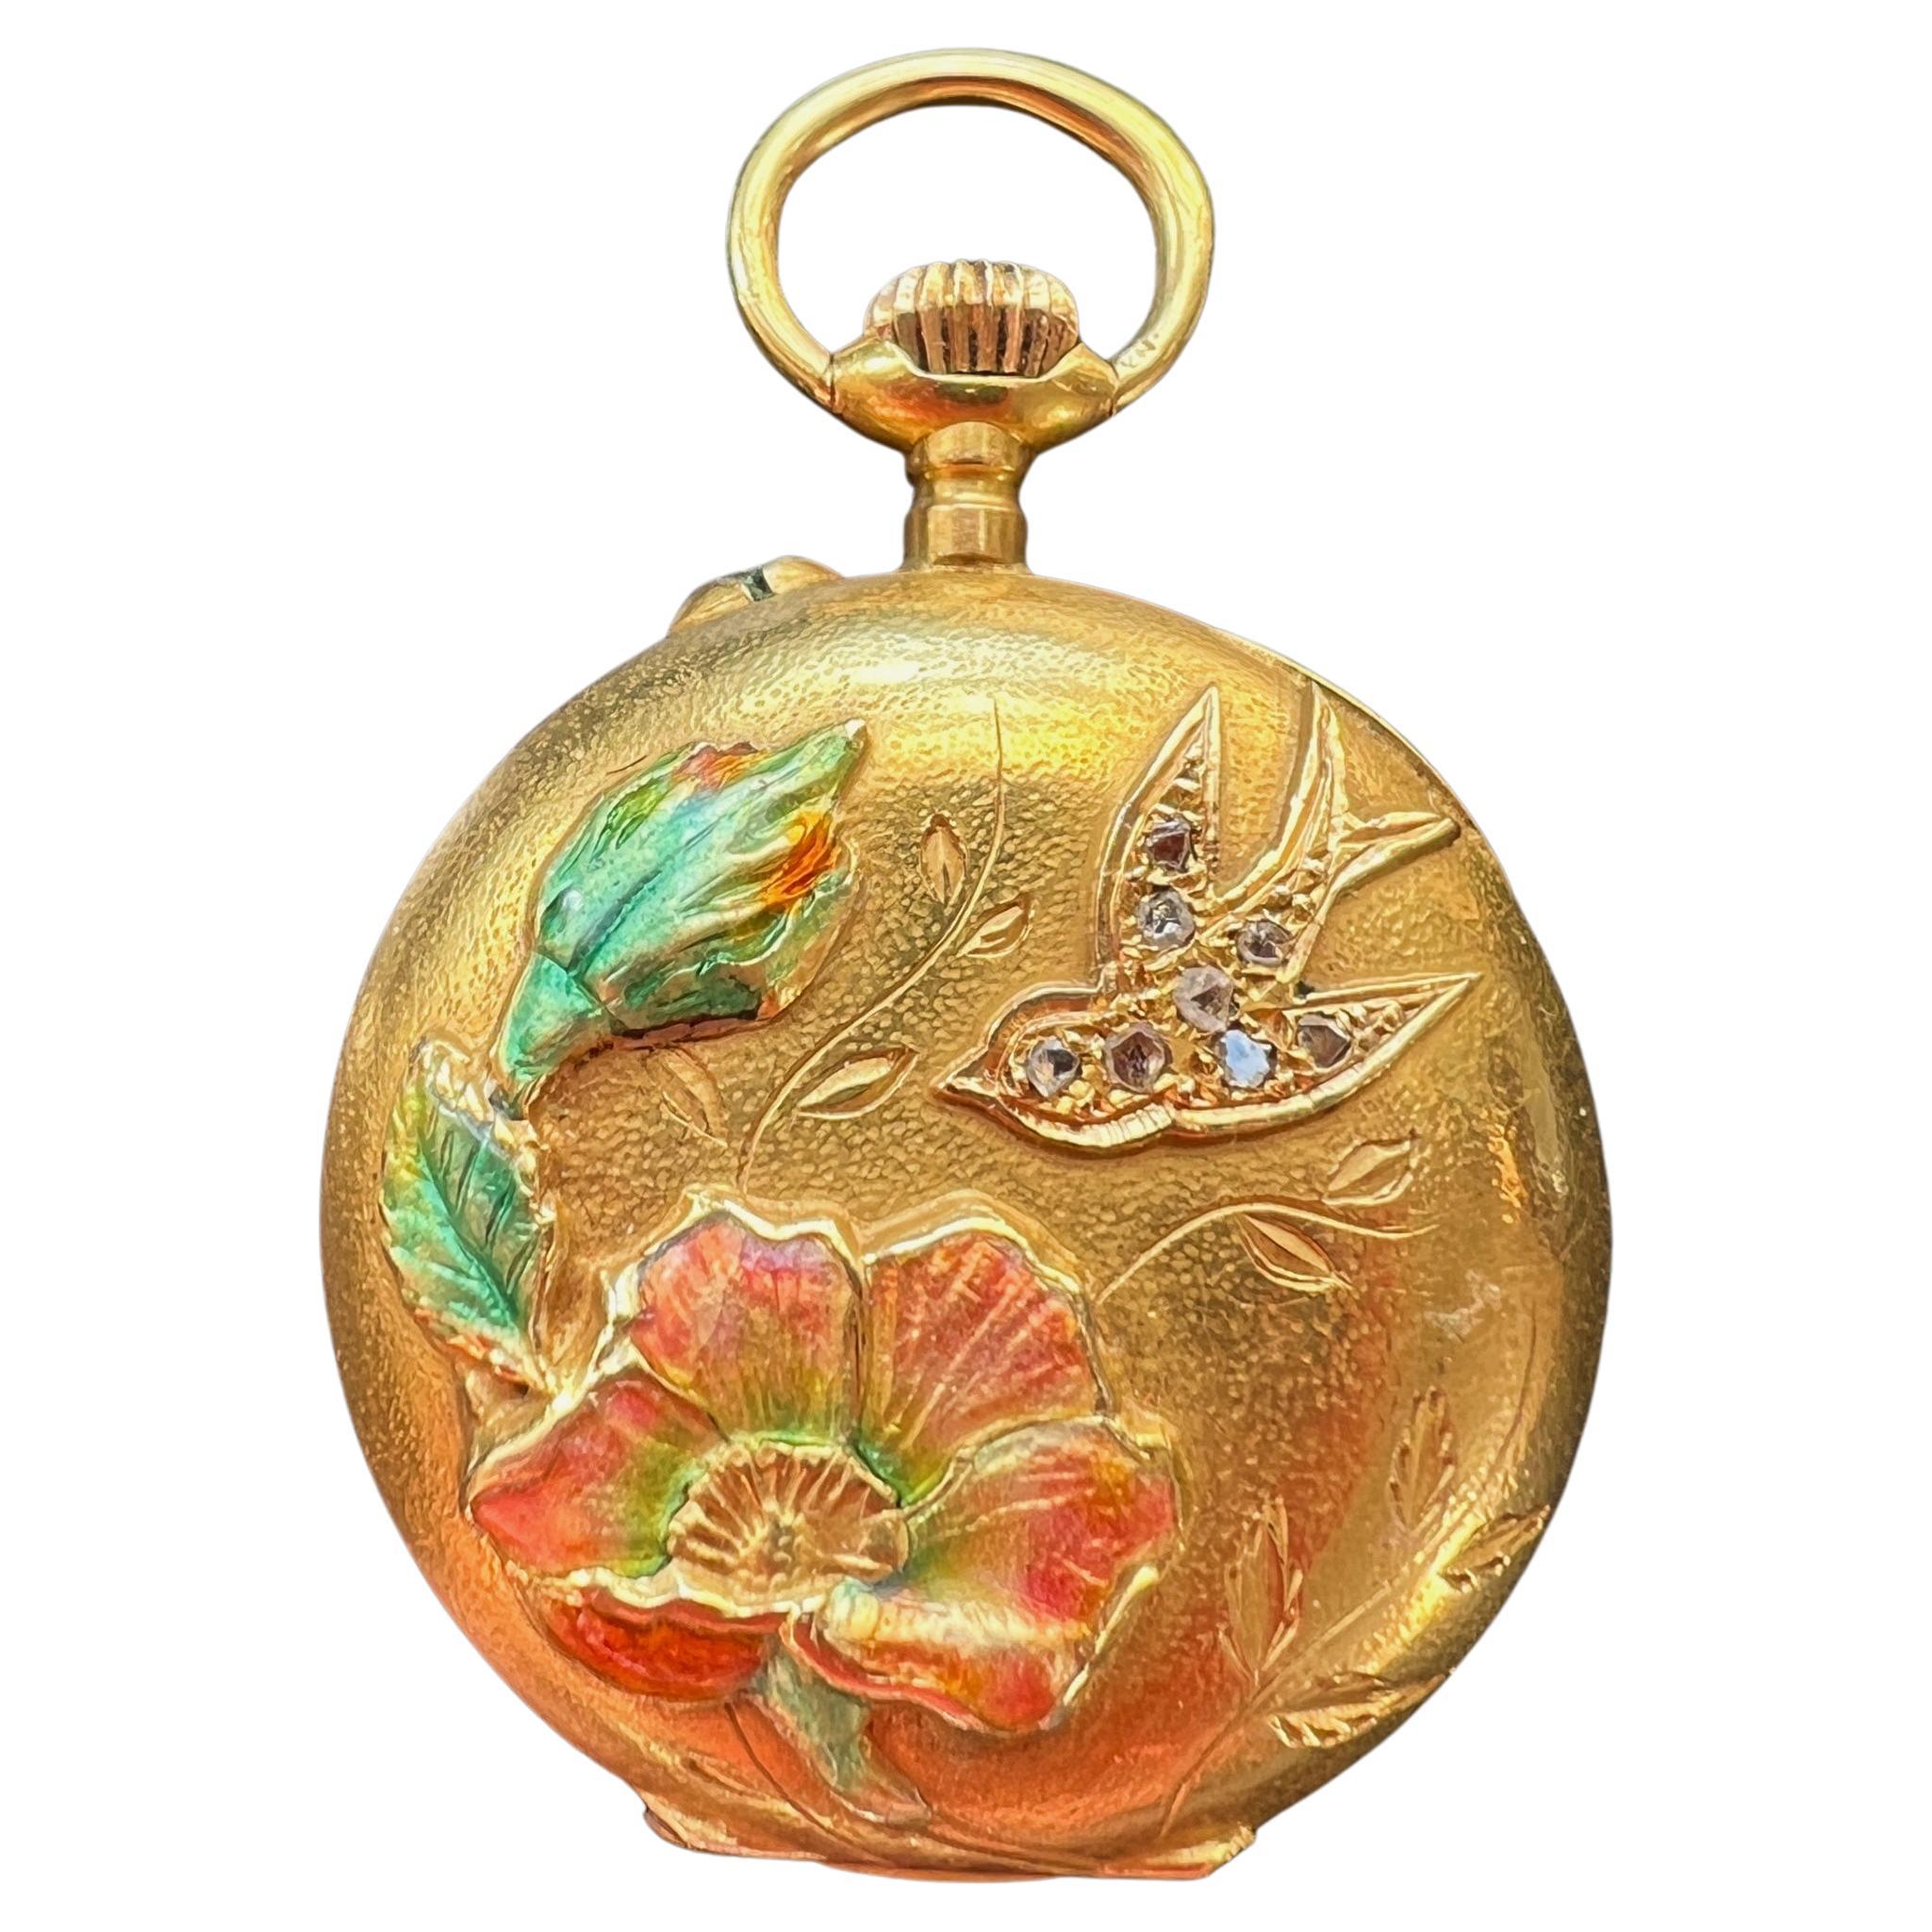 Art Nouveau era 18K gold diamond swallow lily flower pocket watch pendant